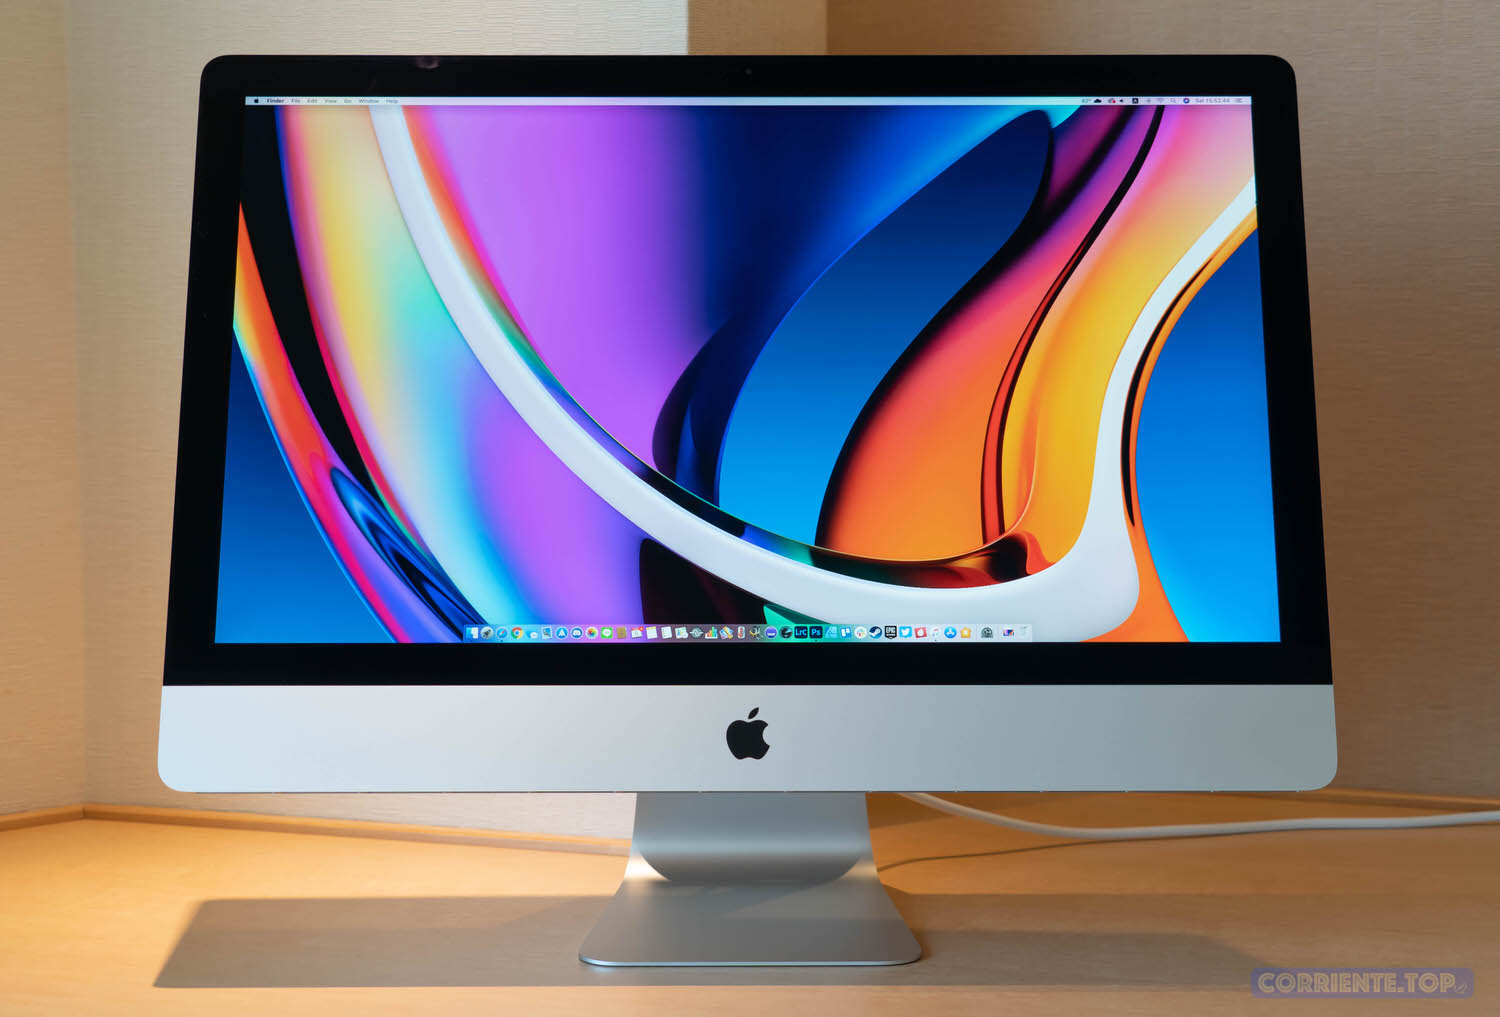 iMac  27インチiMac Retina 5k ディスプレイモデル